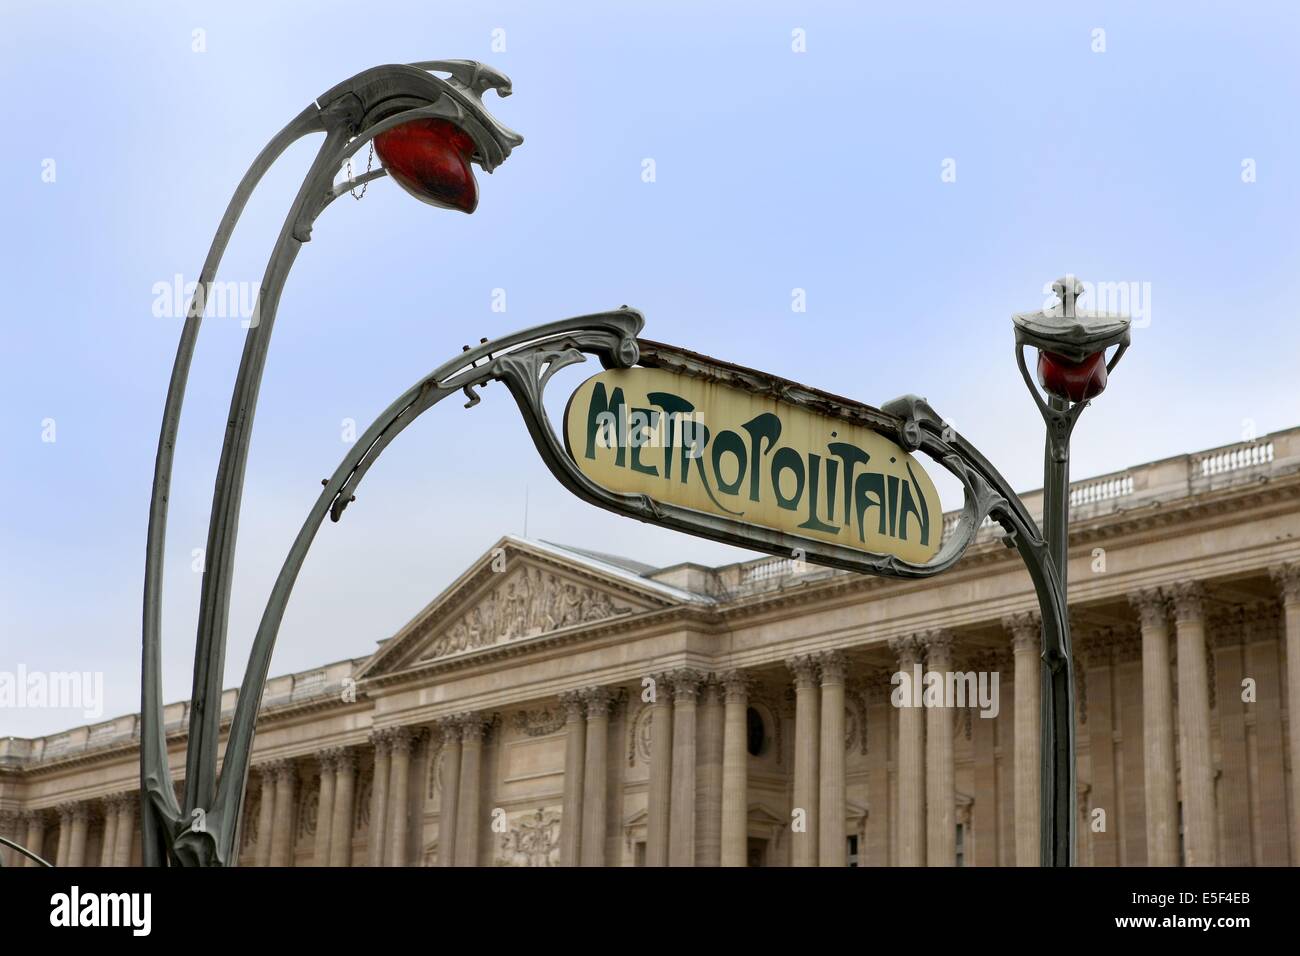 France, ile de france, paris 8e arrondissement, rue de rivoli, station de metro louvre rivoli, musee du louvre,  Date : 2011-2012 Stock Photo